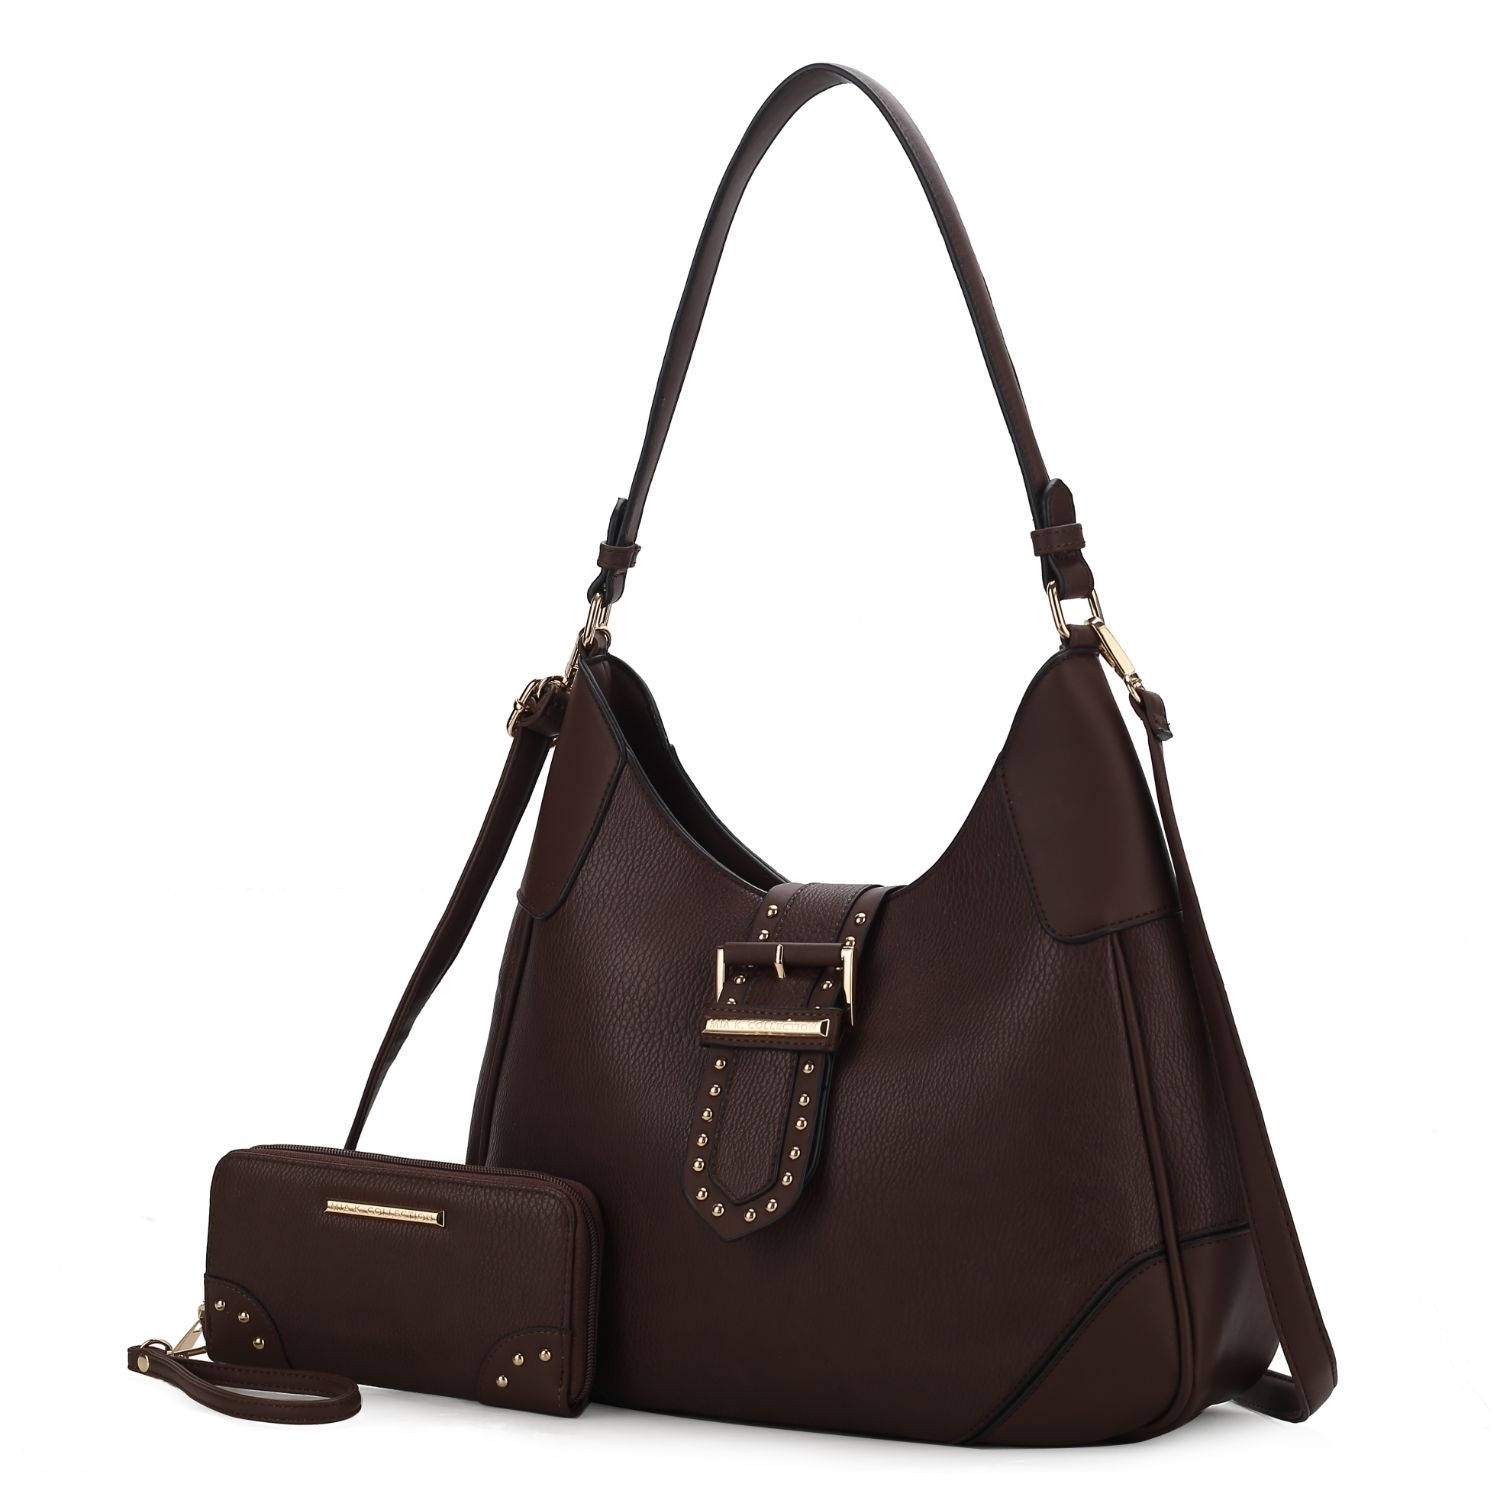 MKF Collection Juliette Shoulder Handbag With Matching Wallet 2 Pcs By Mia K. - Blush